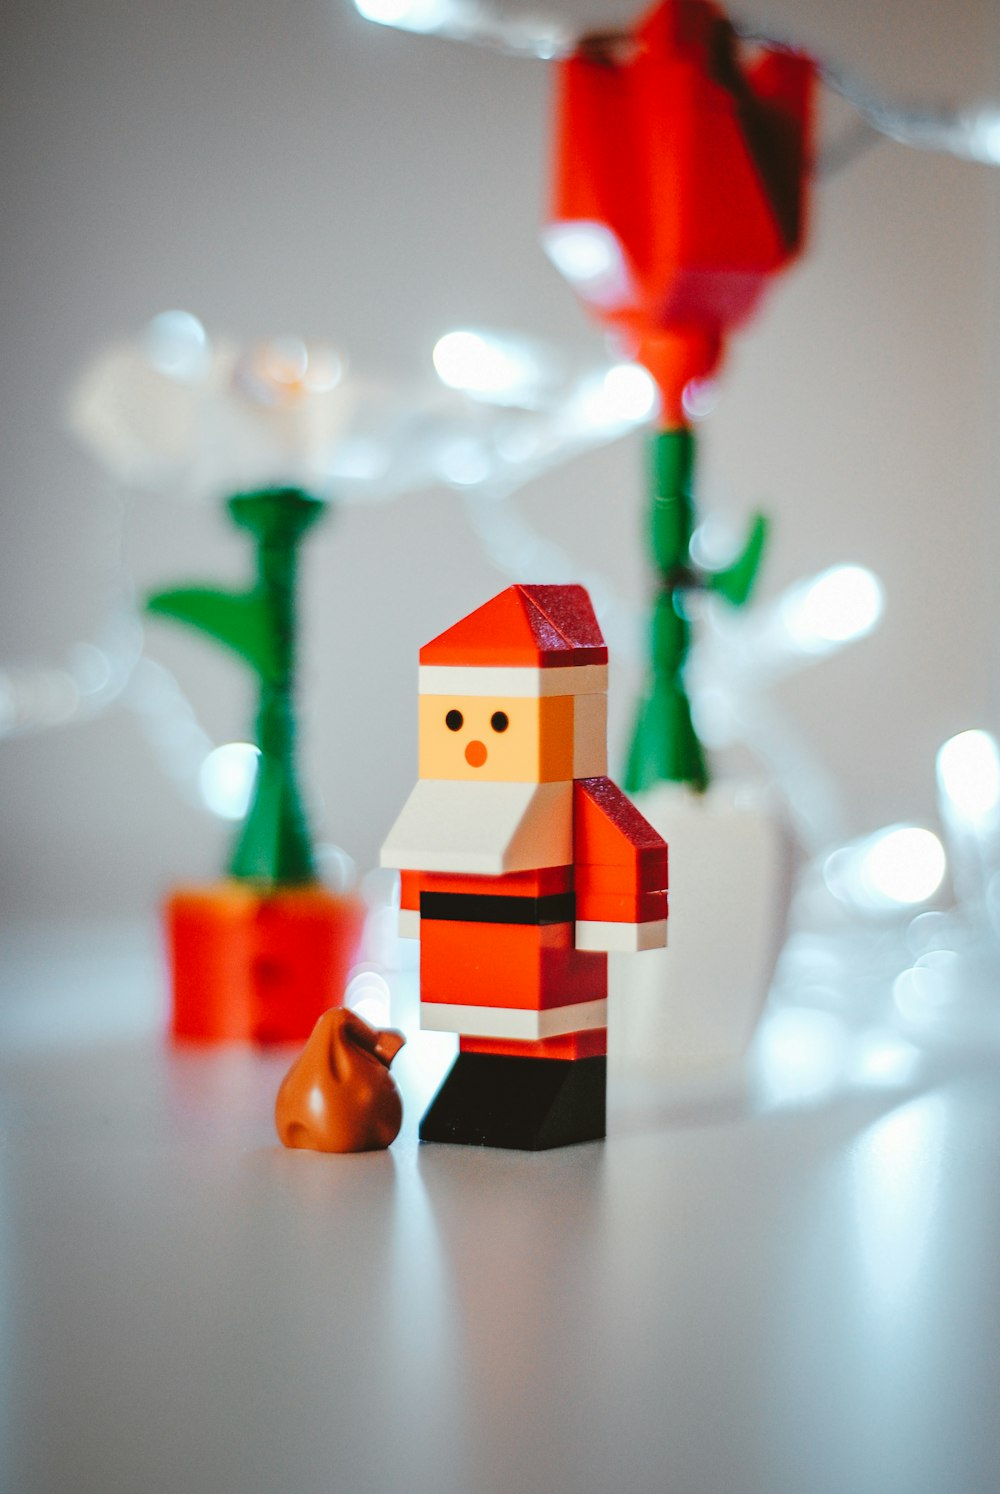 shallow focus photo of Santa Claus mini figure